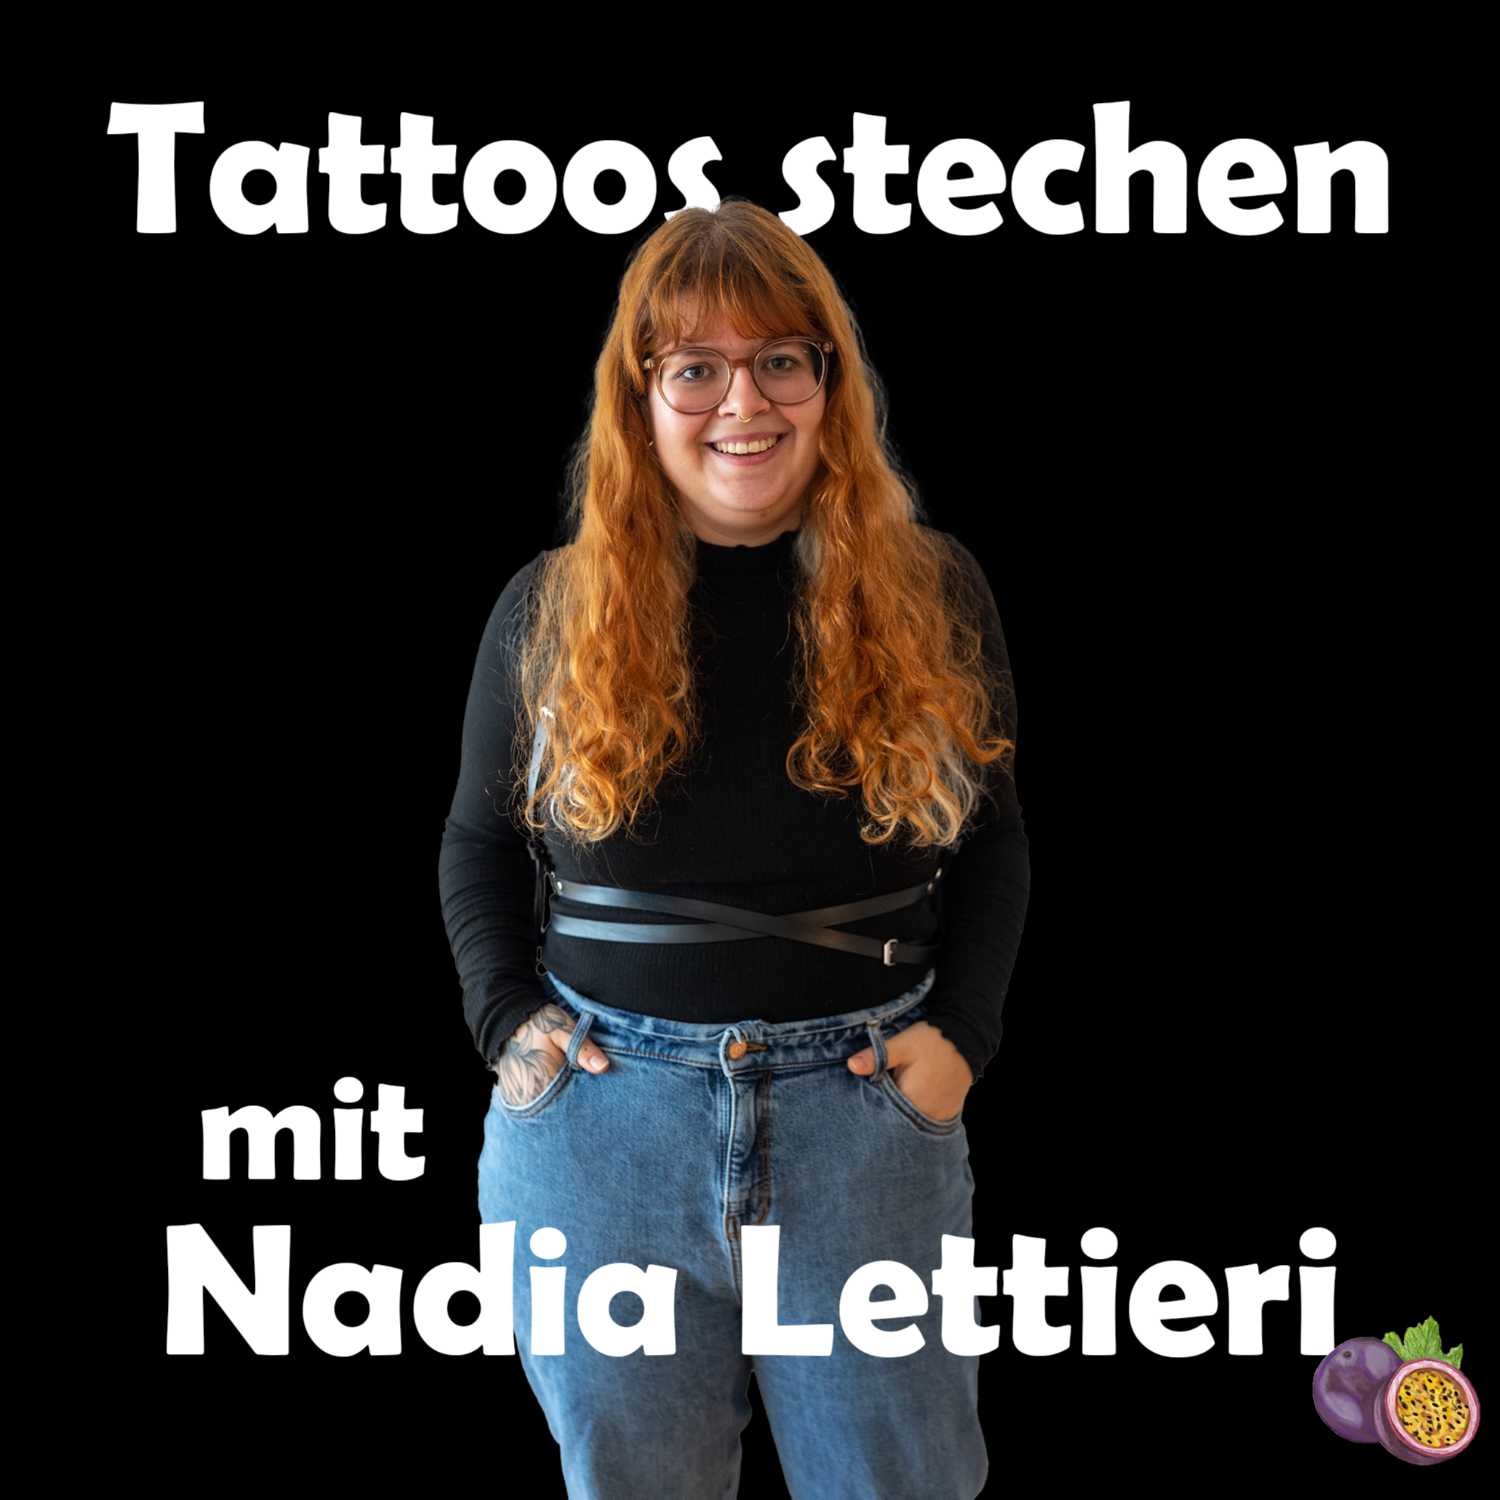 Tattoos stechen mit Nadia Lettieri